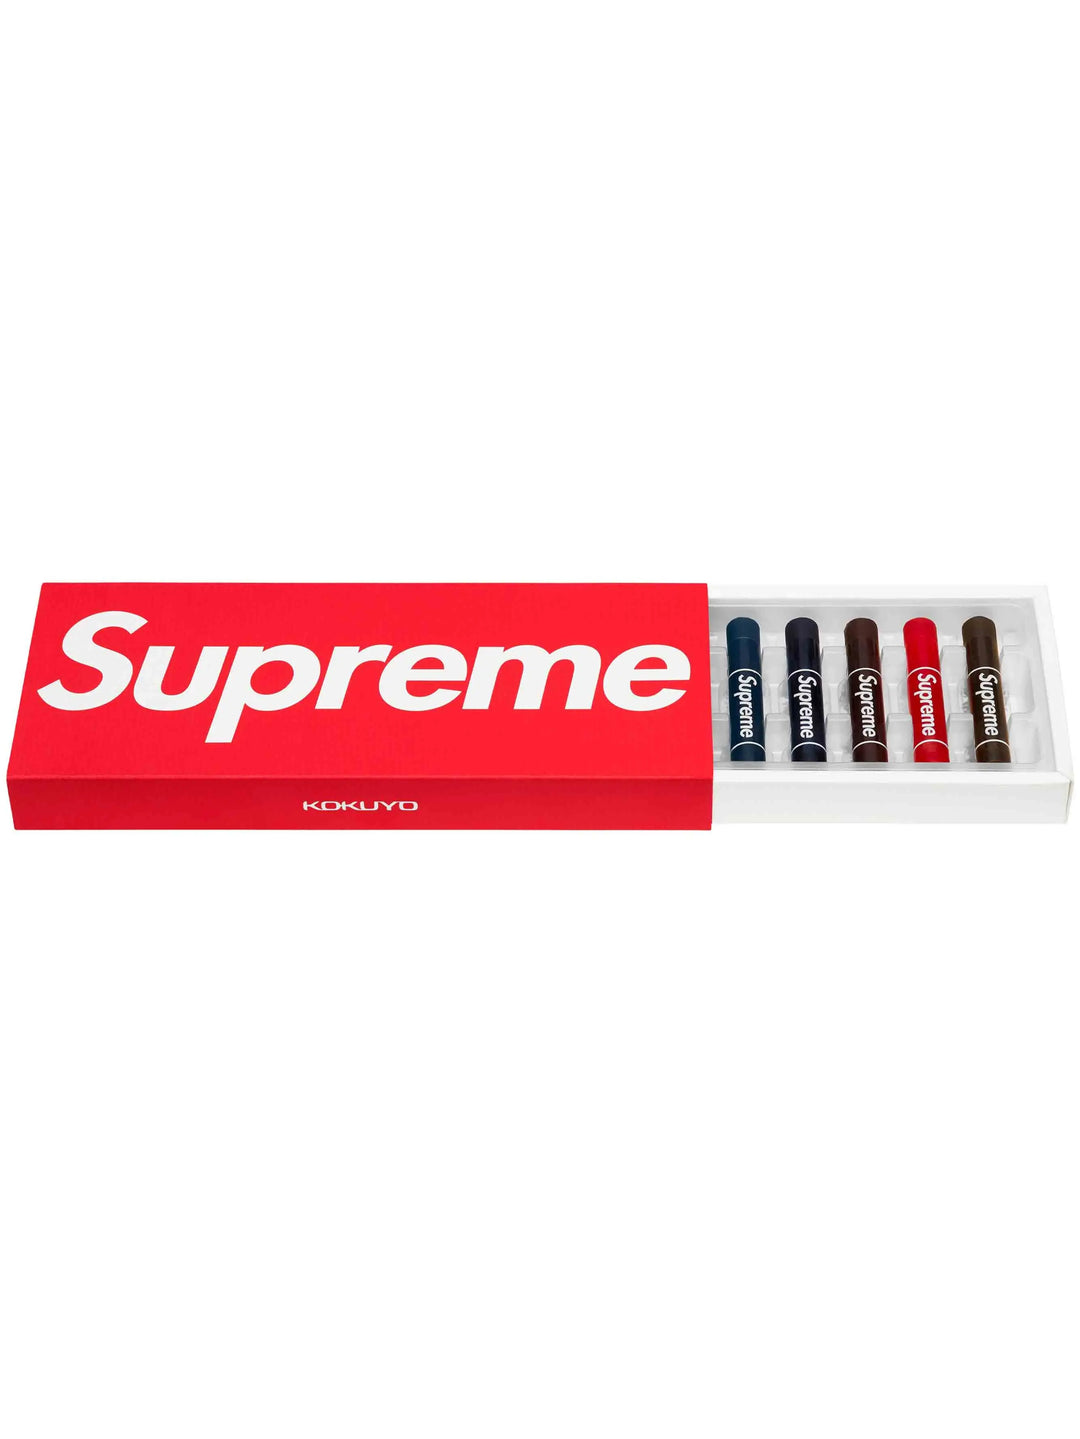 Supreme Kokuyo Translucent Crayons Multicolour (Pack of 10) Prior